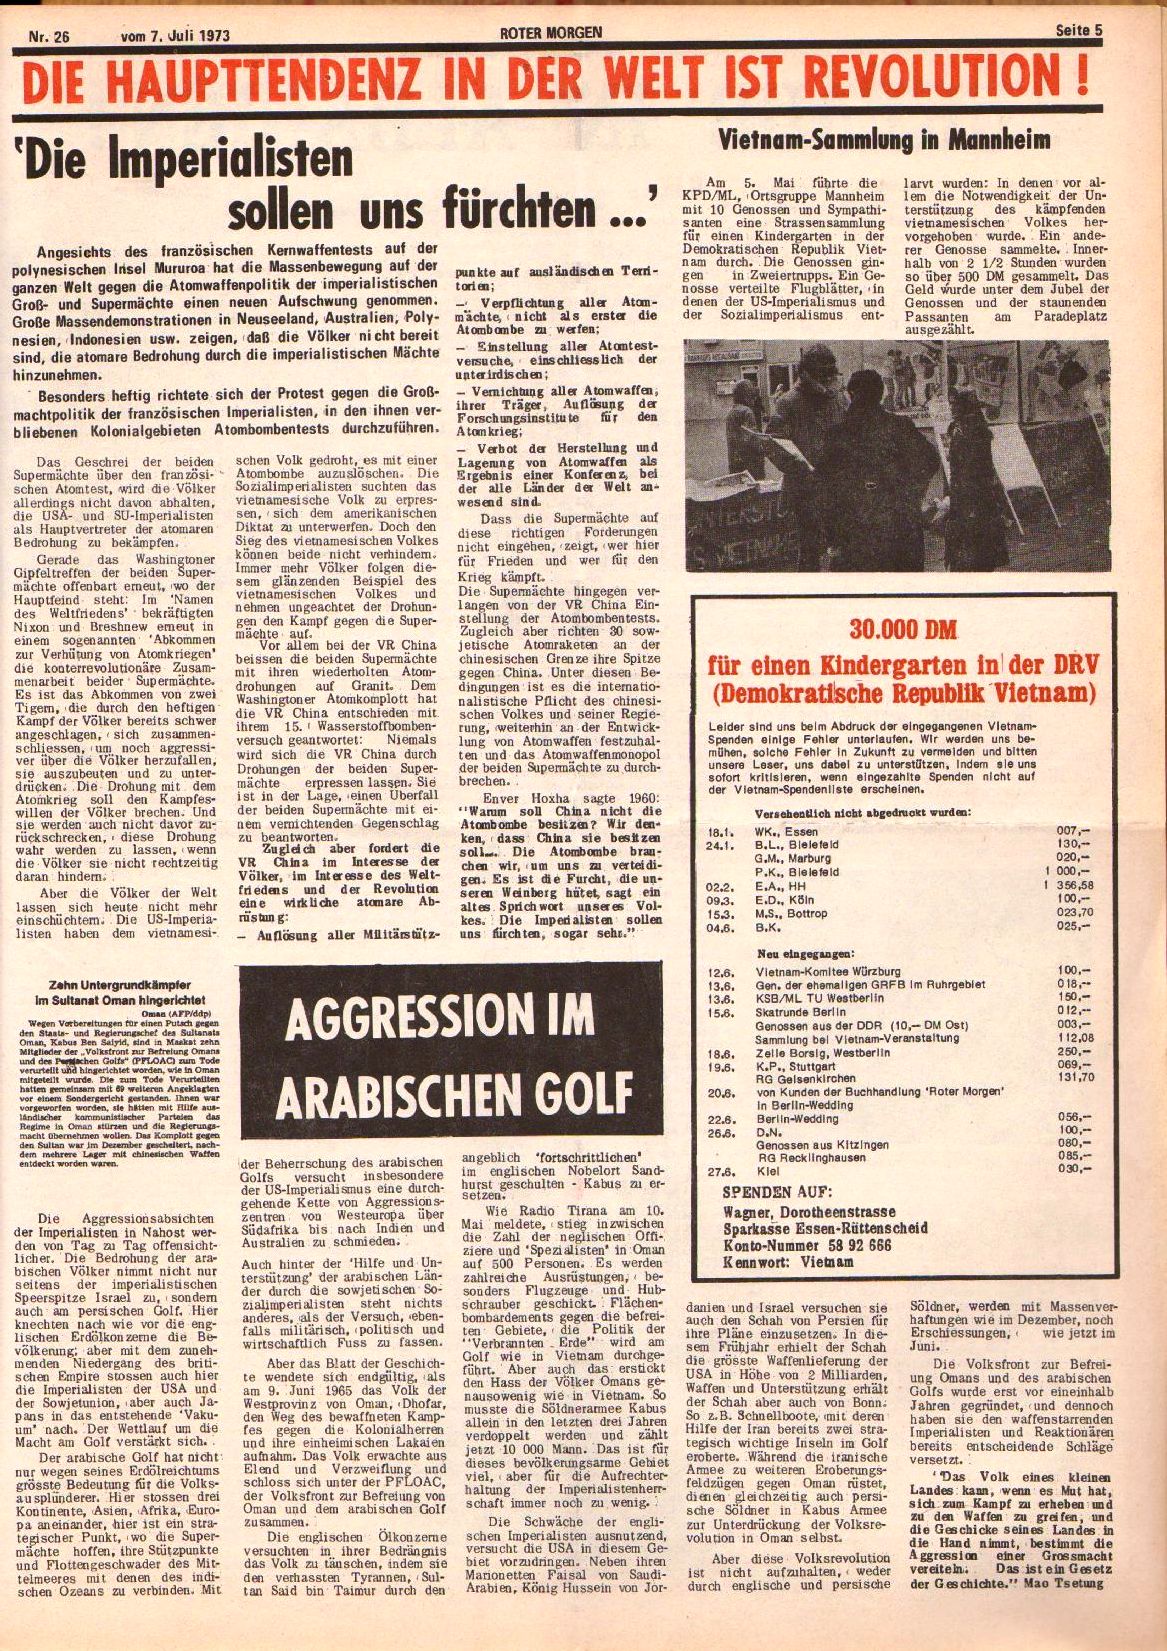 Roter Morgen, 7. Jg., 7. Juli 1973, Nr. 26, Seite 5